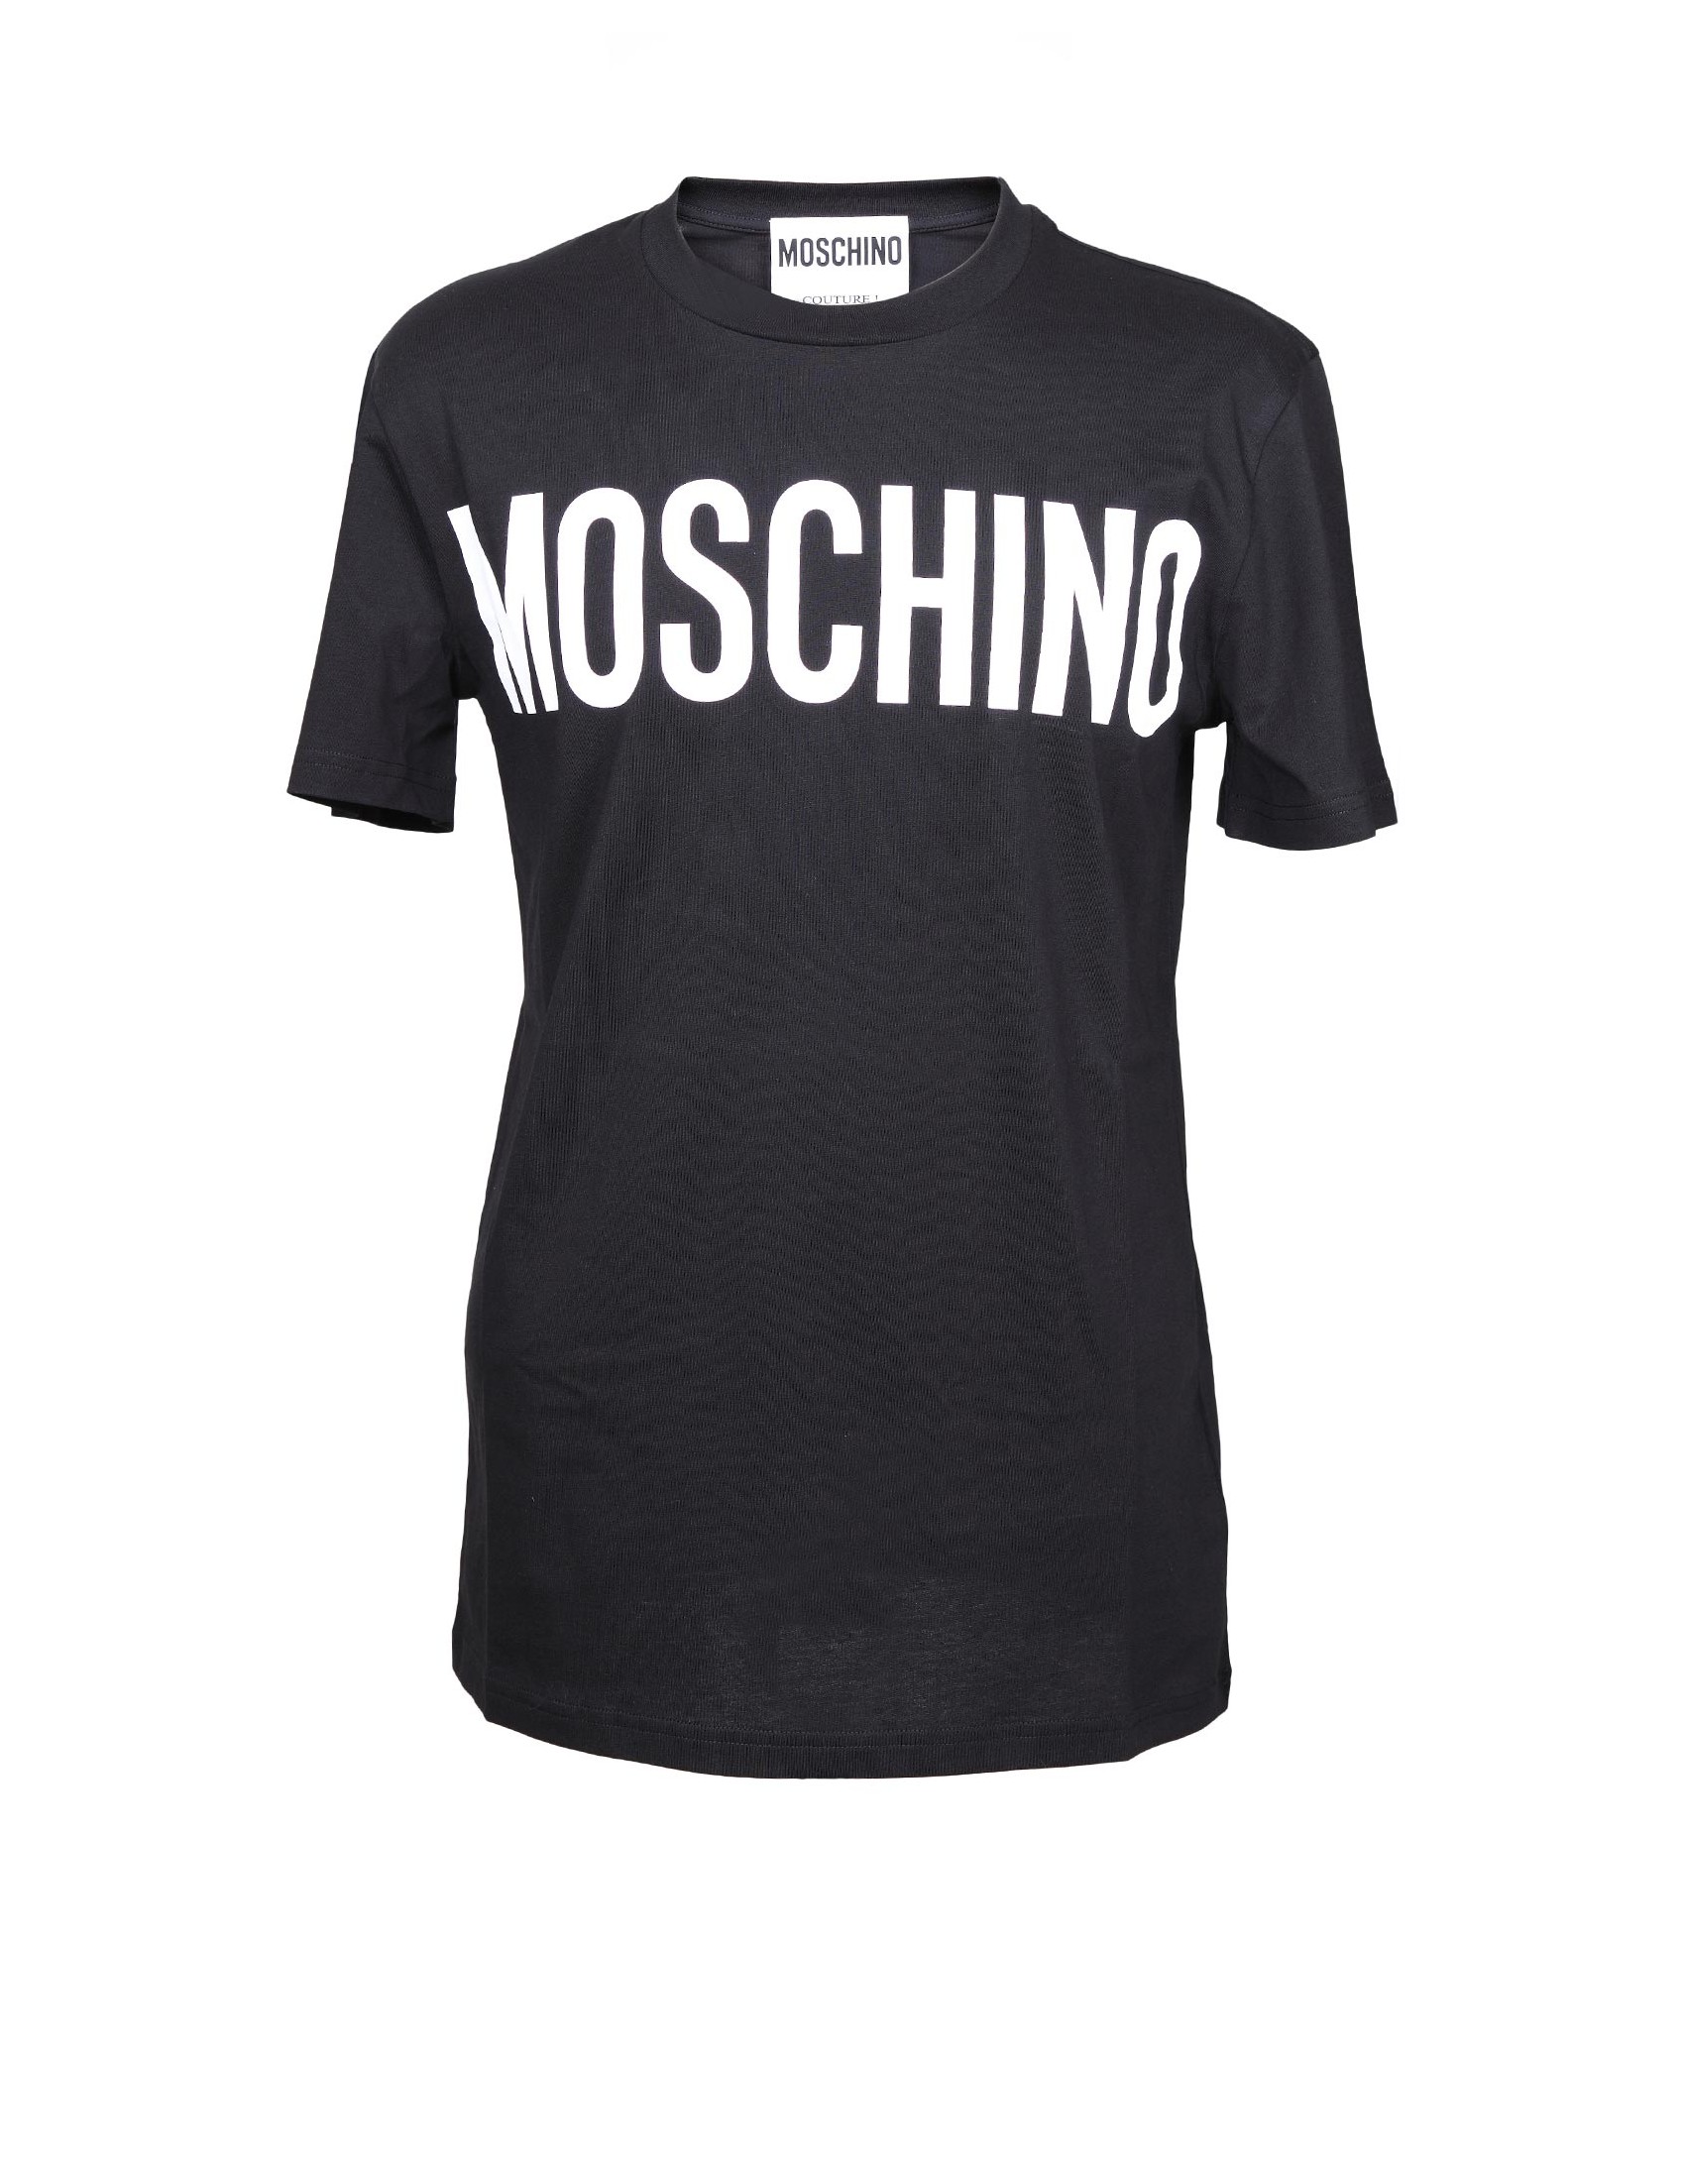 MOSCHINO Men's Clothing T-Shirts & Polos Black NIB Authentic | eBay